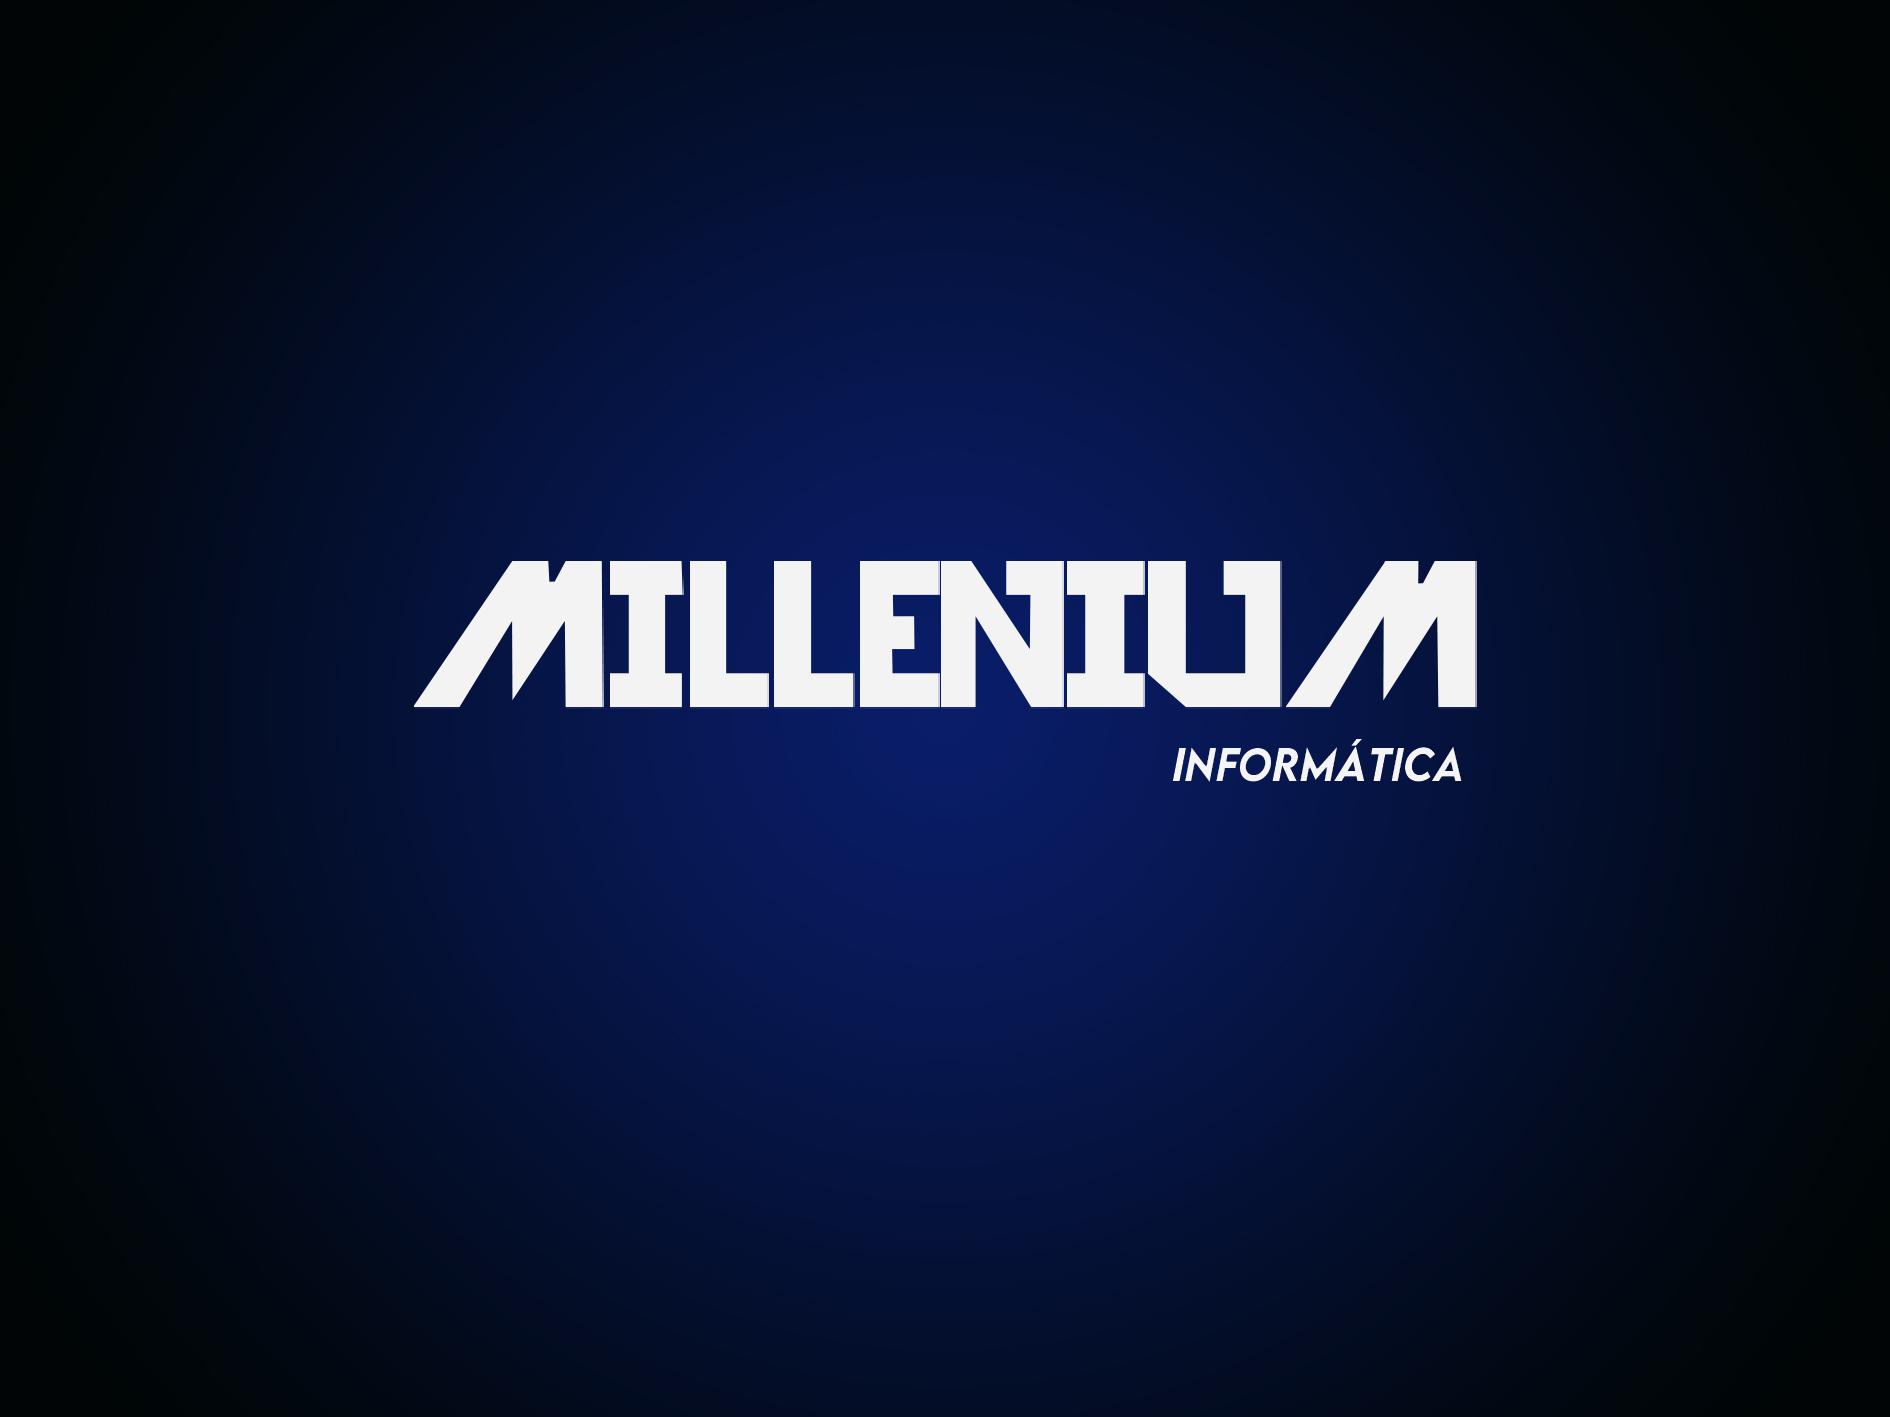 Millenium Informática Logo